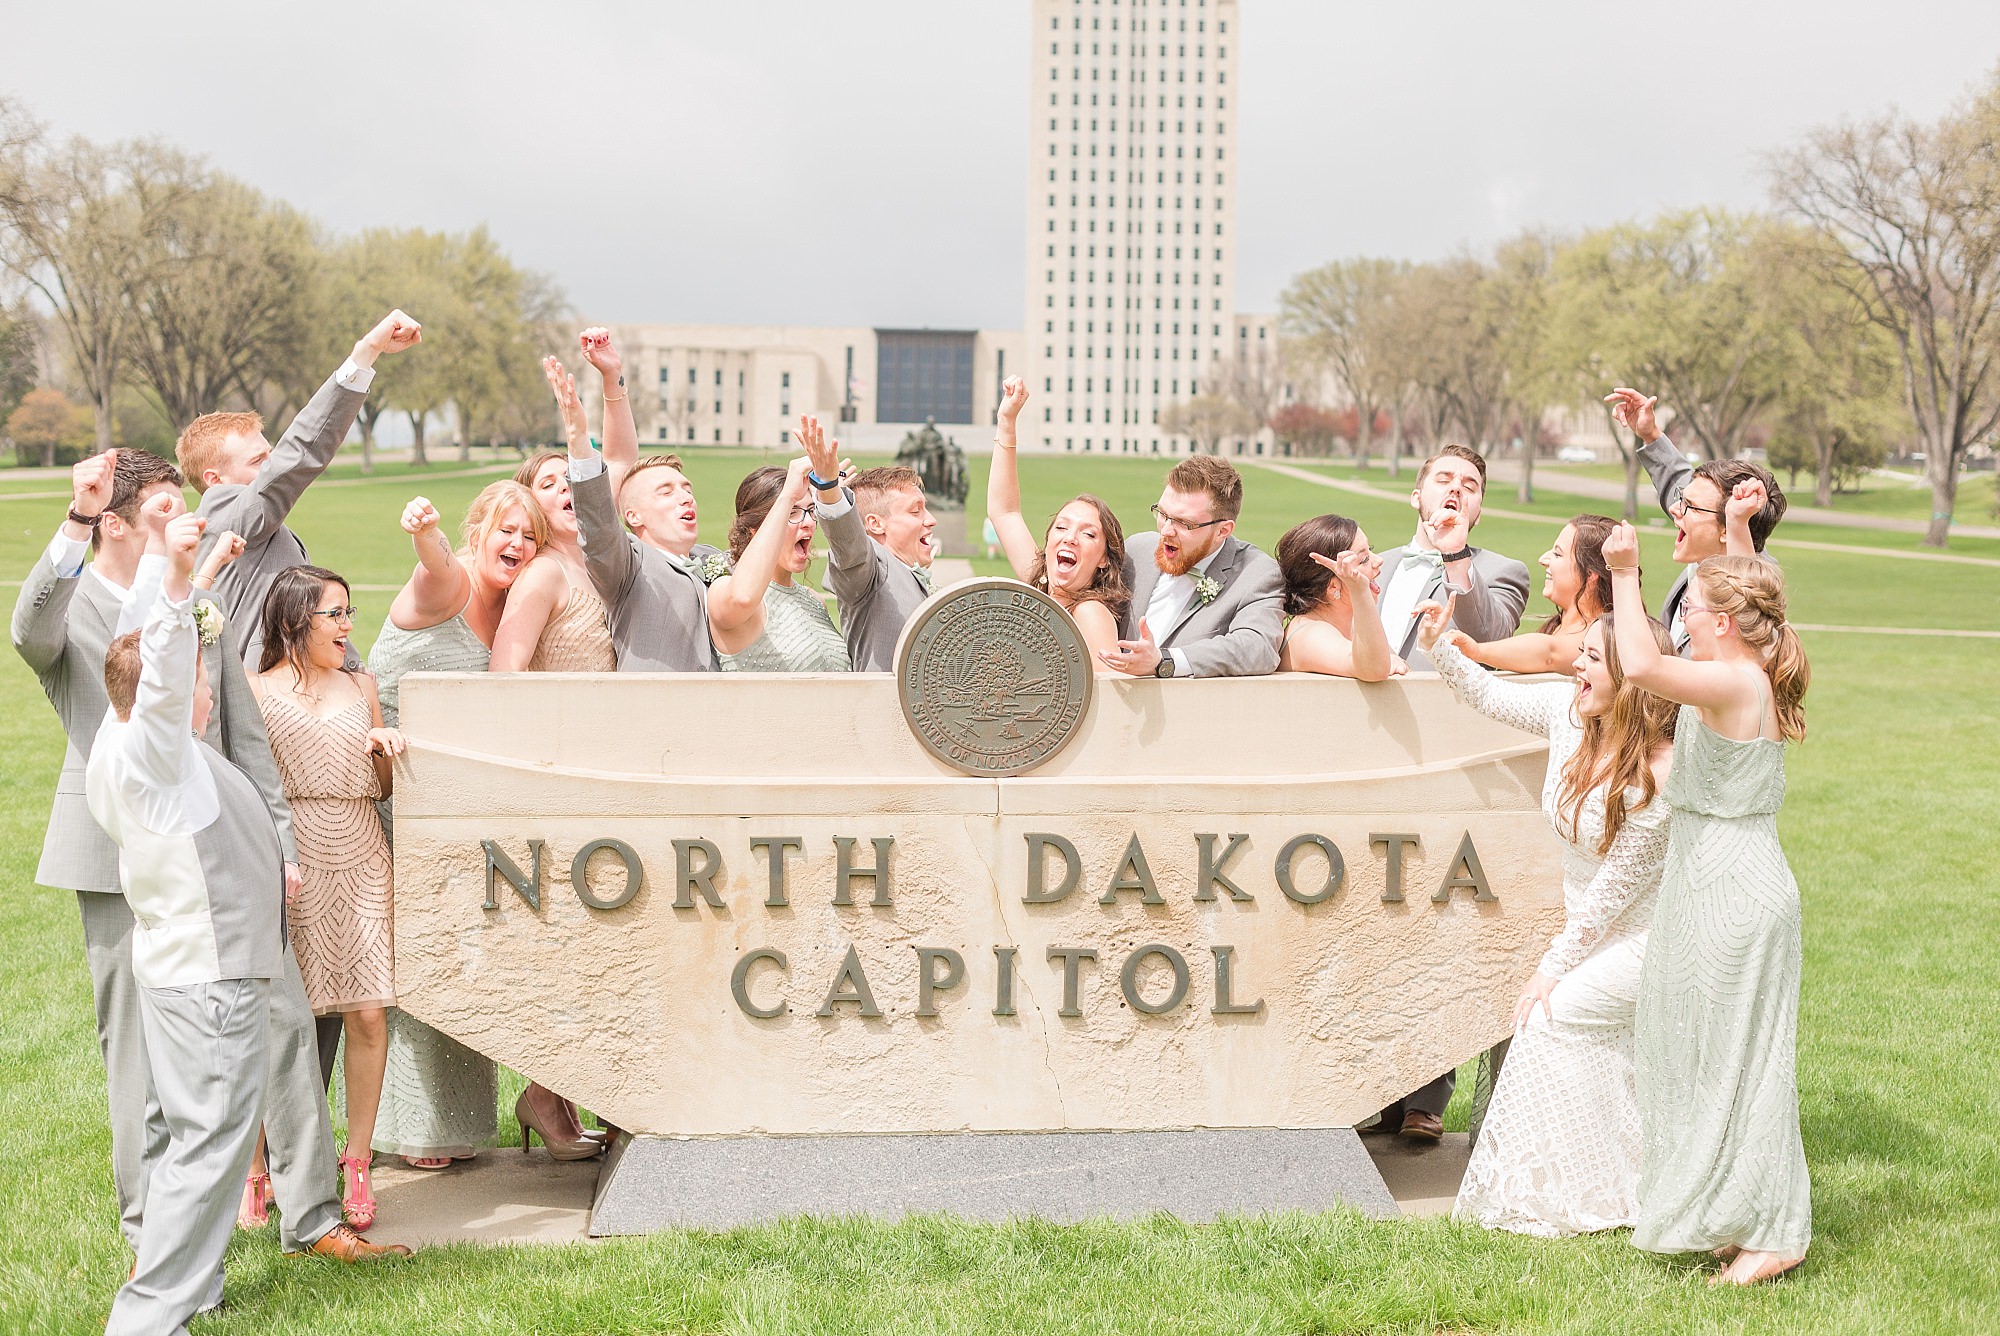 A celebrating bridal party surround the North Dakota Capitol sign